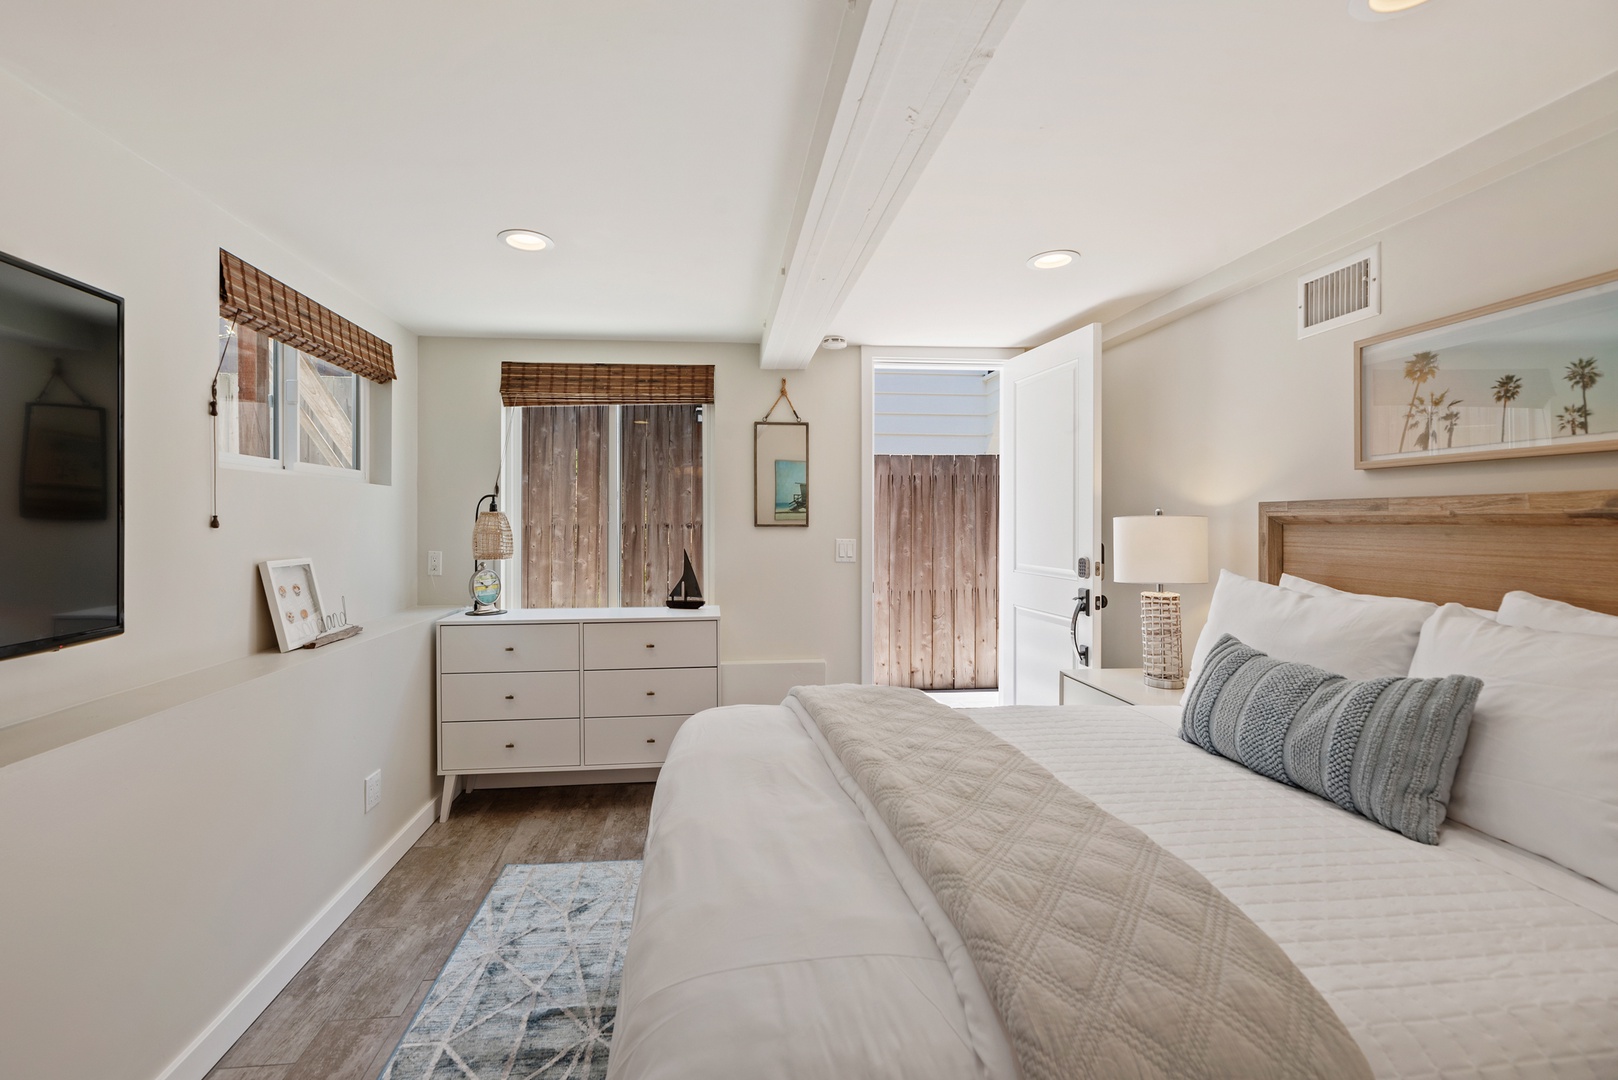 Del Mar Vacation Rentals, Del Mar Zuni Delight - Bedroom with king bed